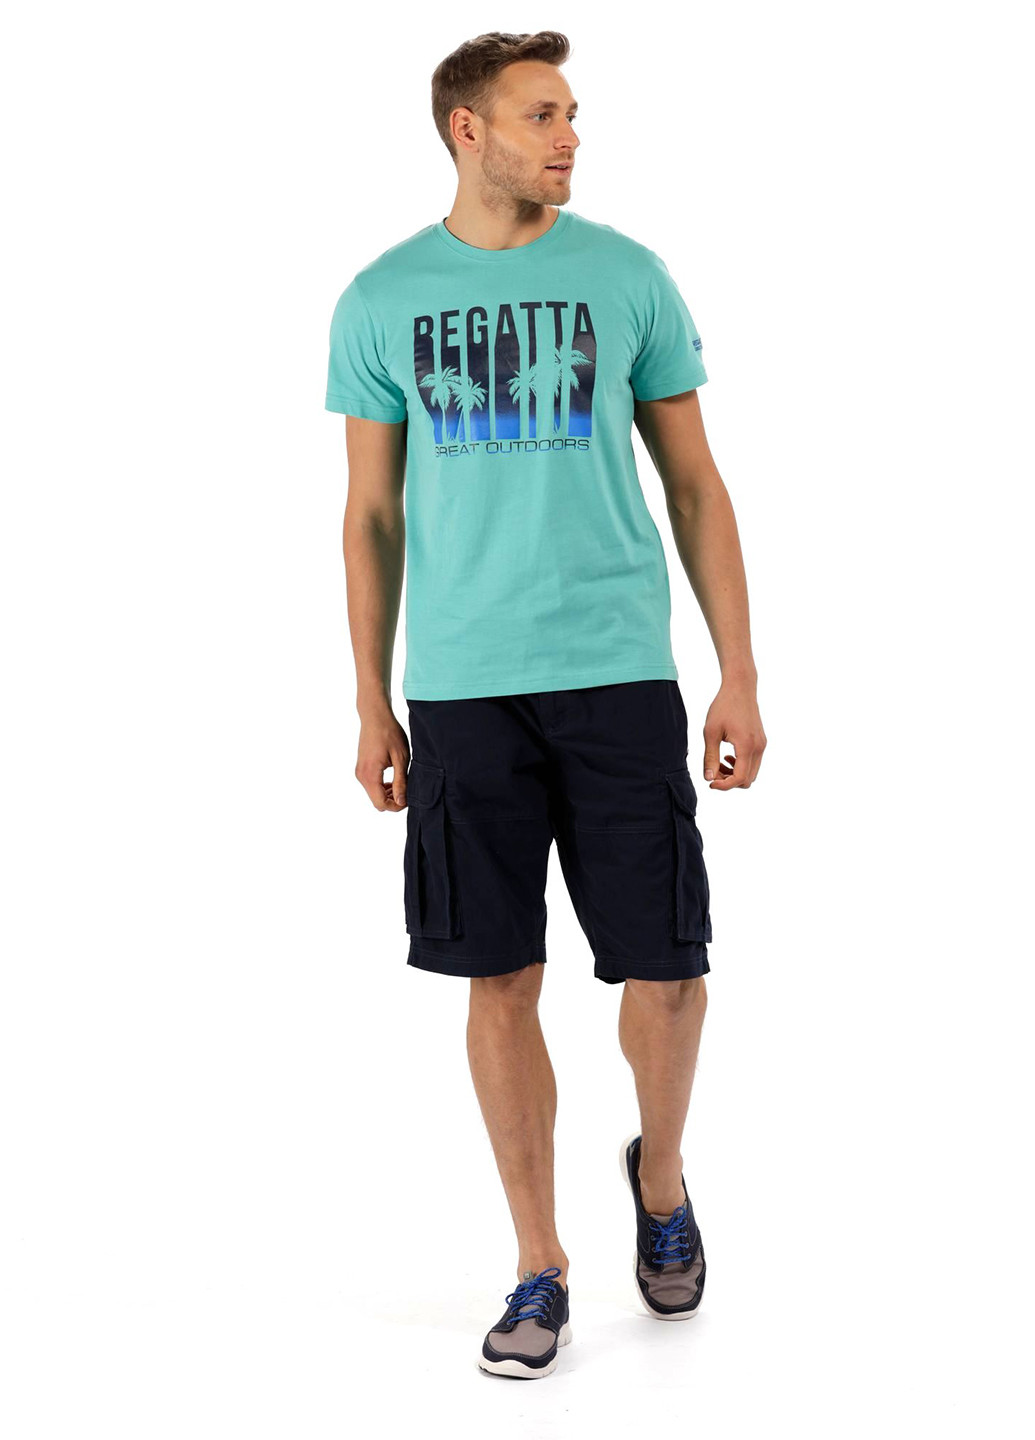 Бирюзовая футболка Regatta